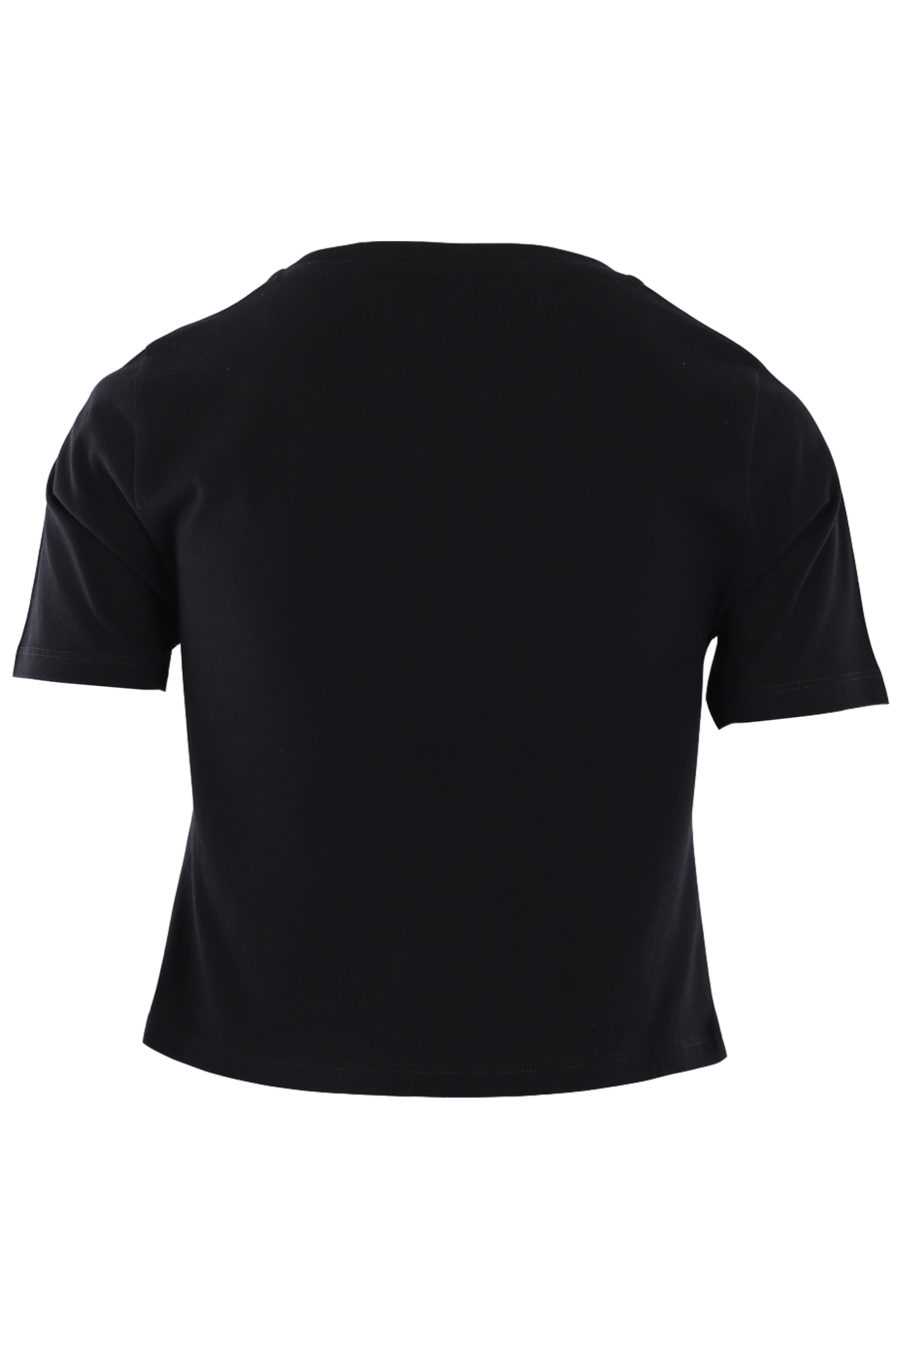 Camiseta negra corta con logo tropical - IMG 0755